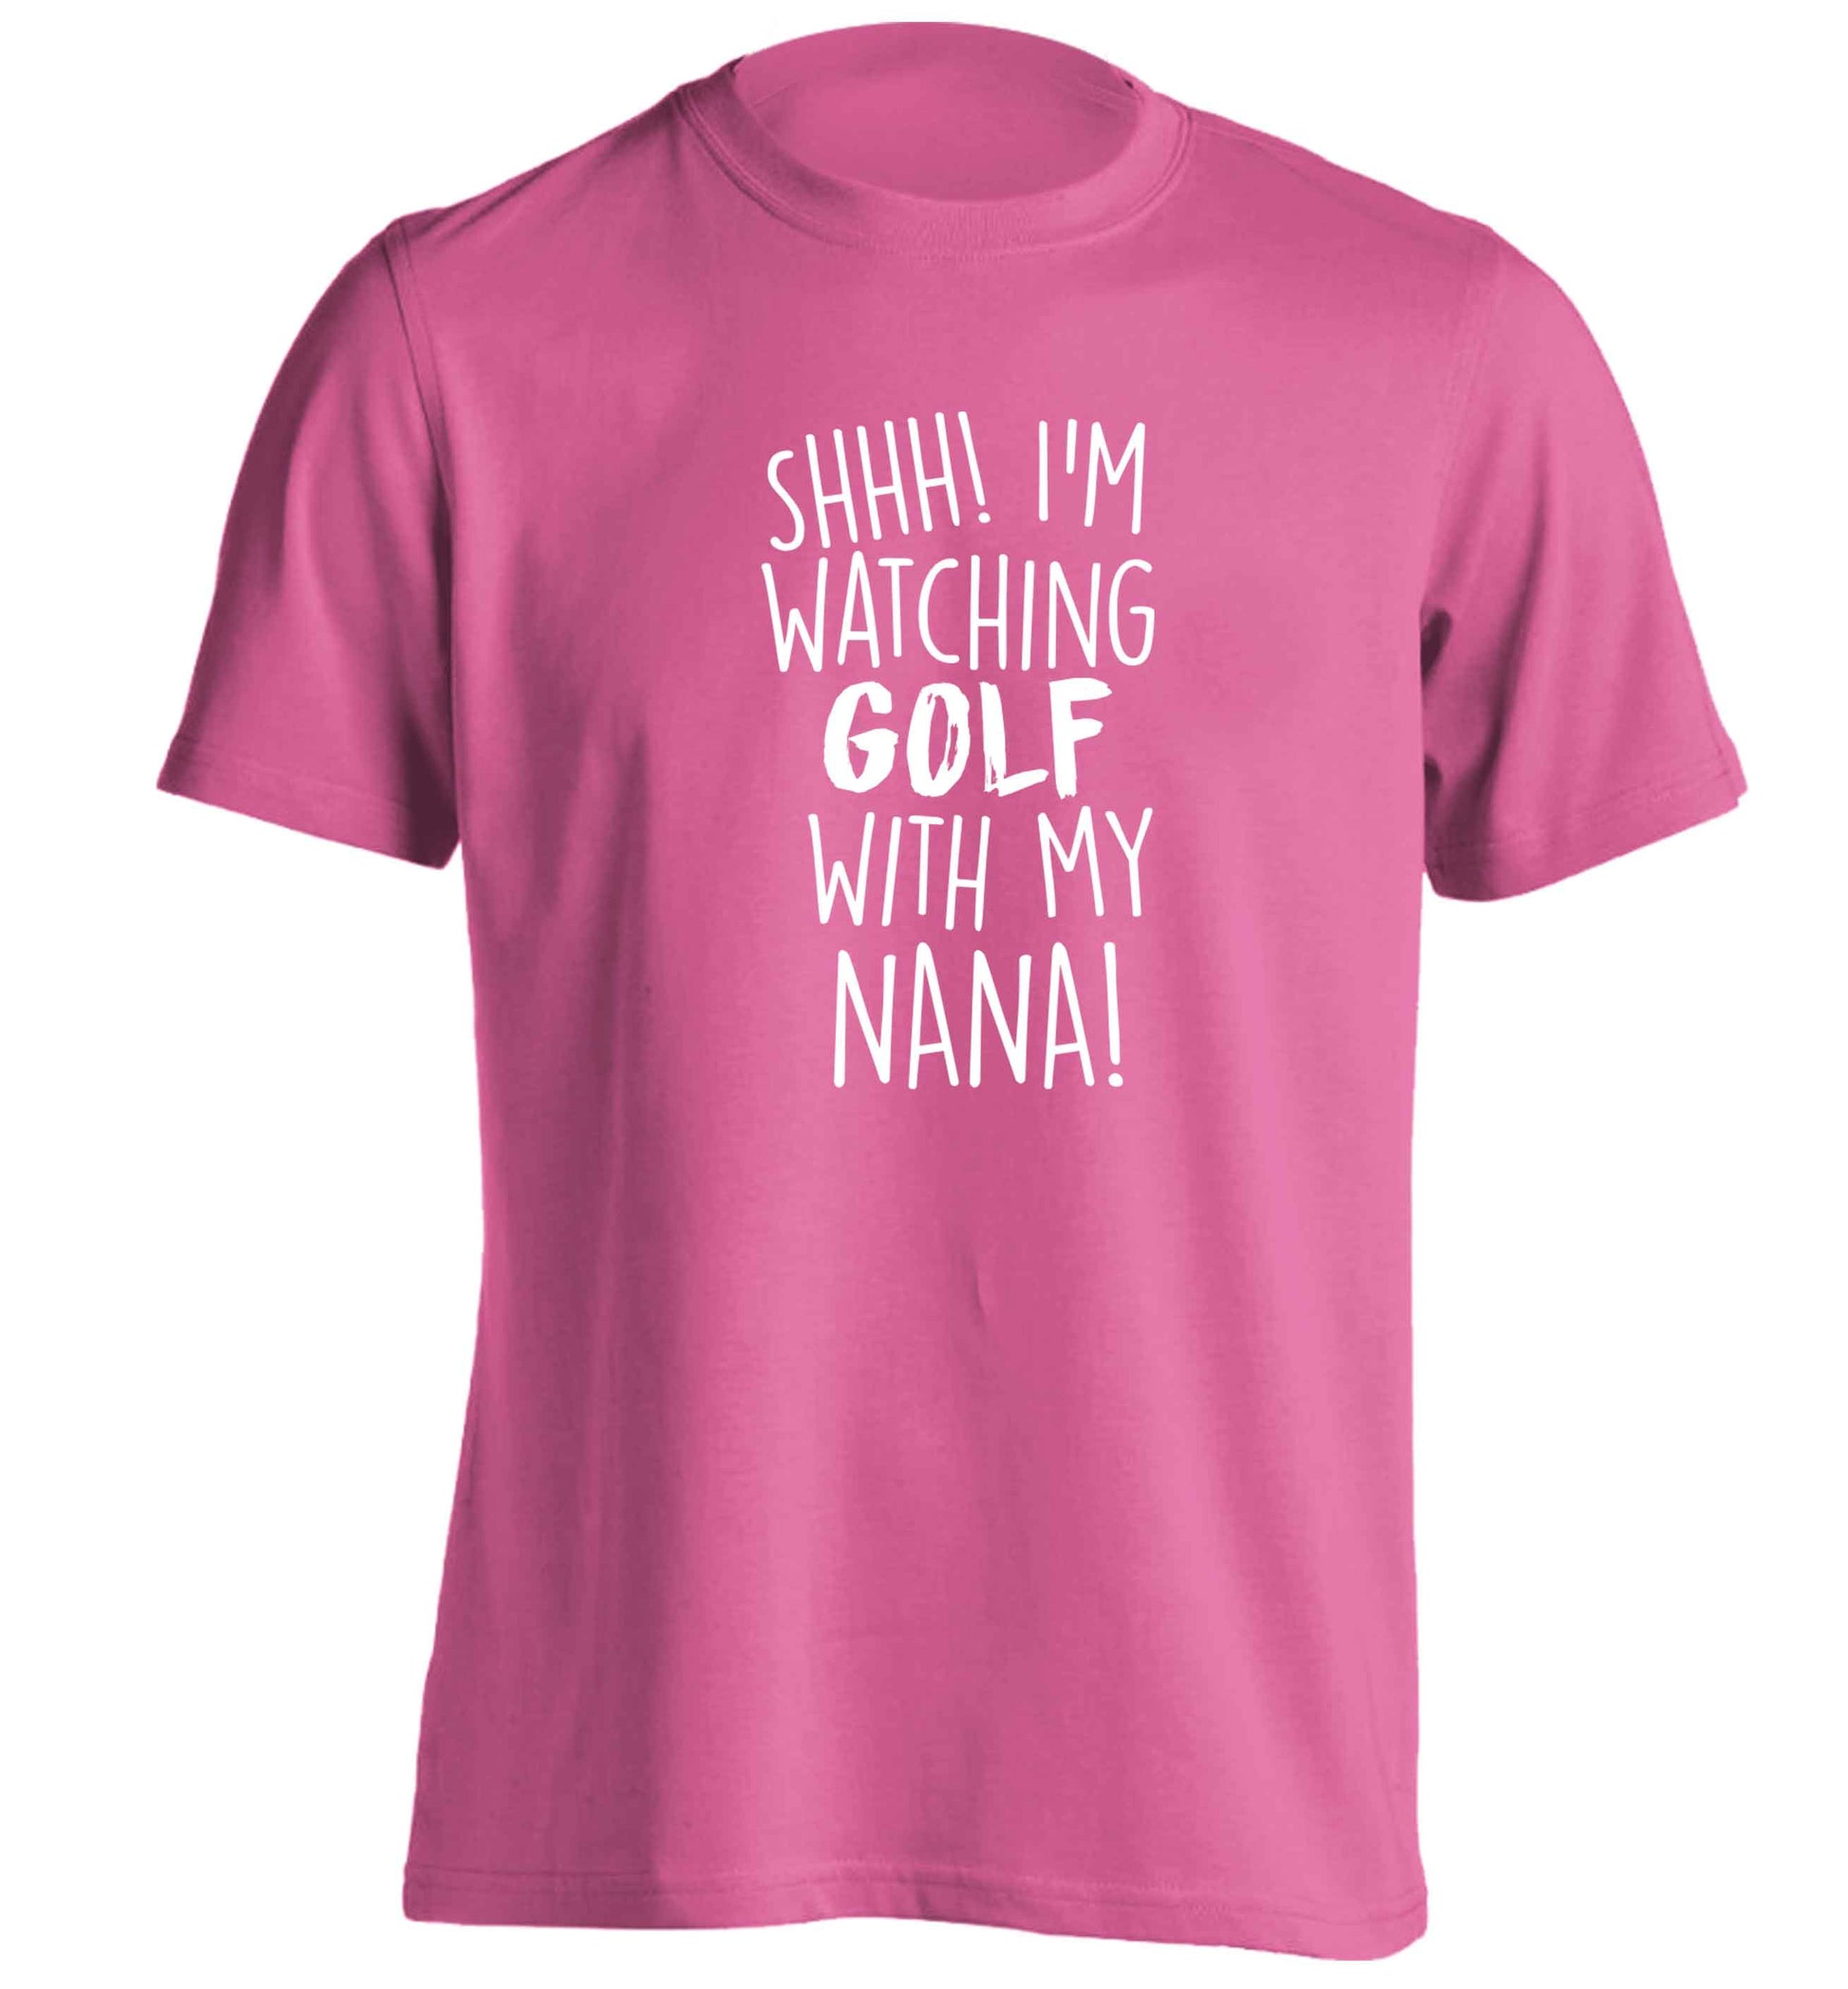 Shh I'm watching golf with my nana adults unisex pink Tshirt 2XL